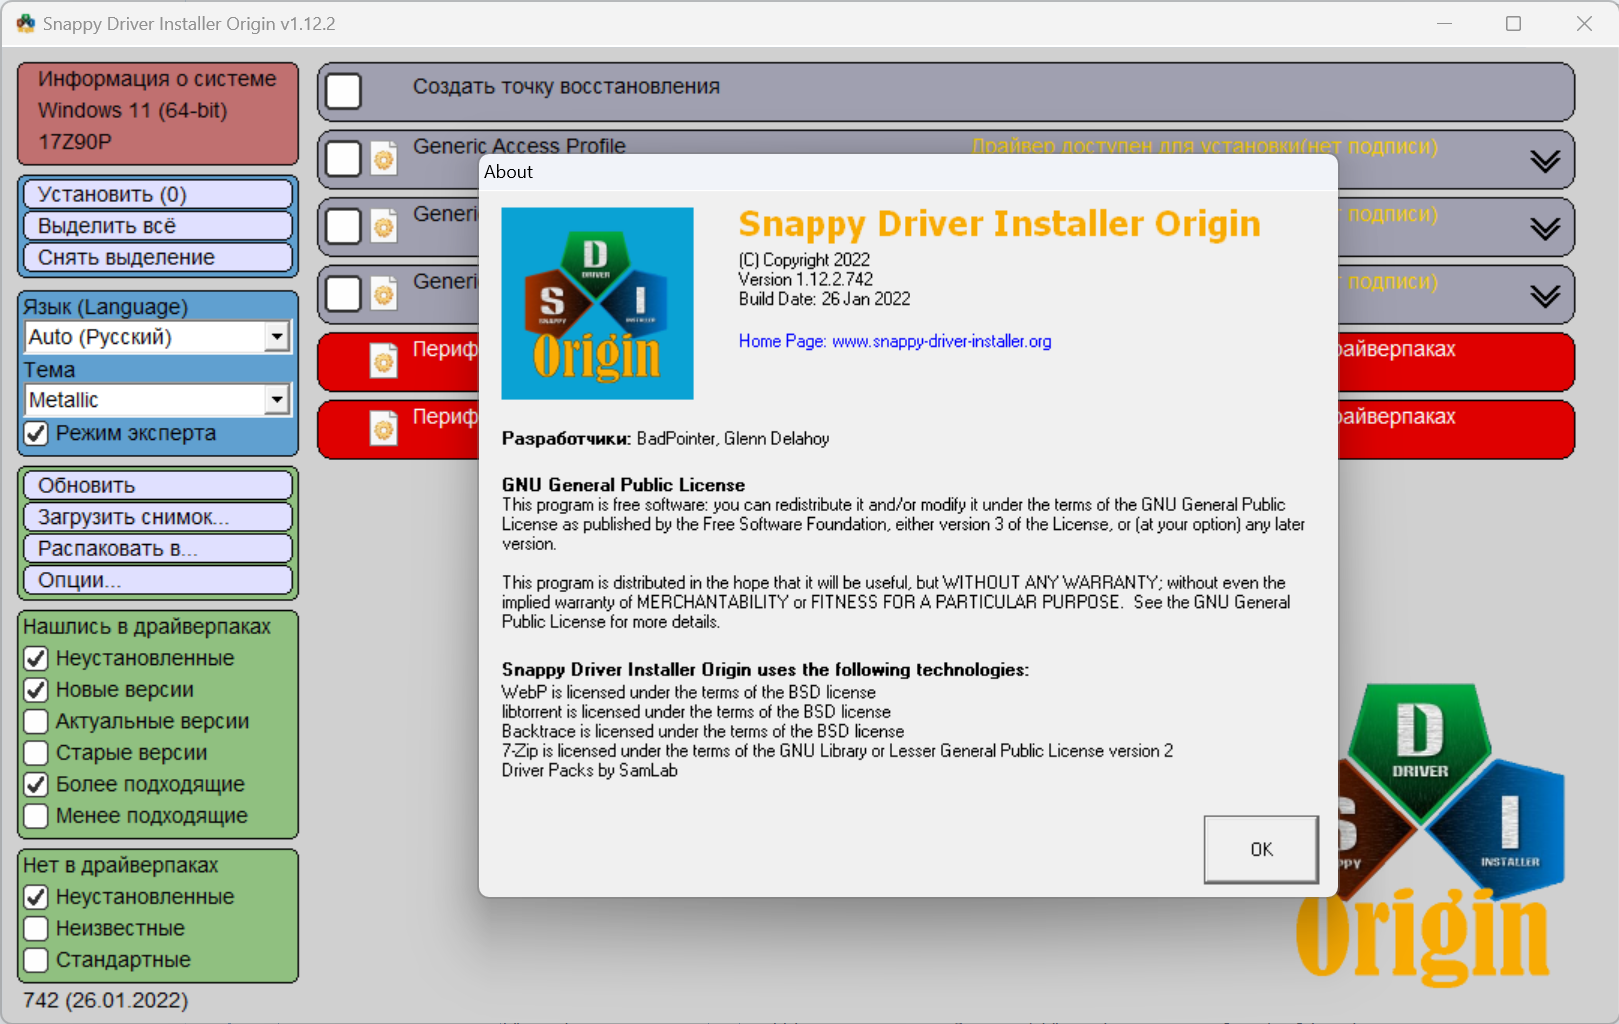 Snappy Driver Installer Origin R742 / Драйверпаки 22.04.3 [Multi/Ru]